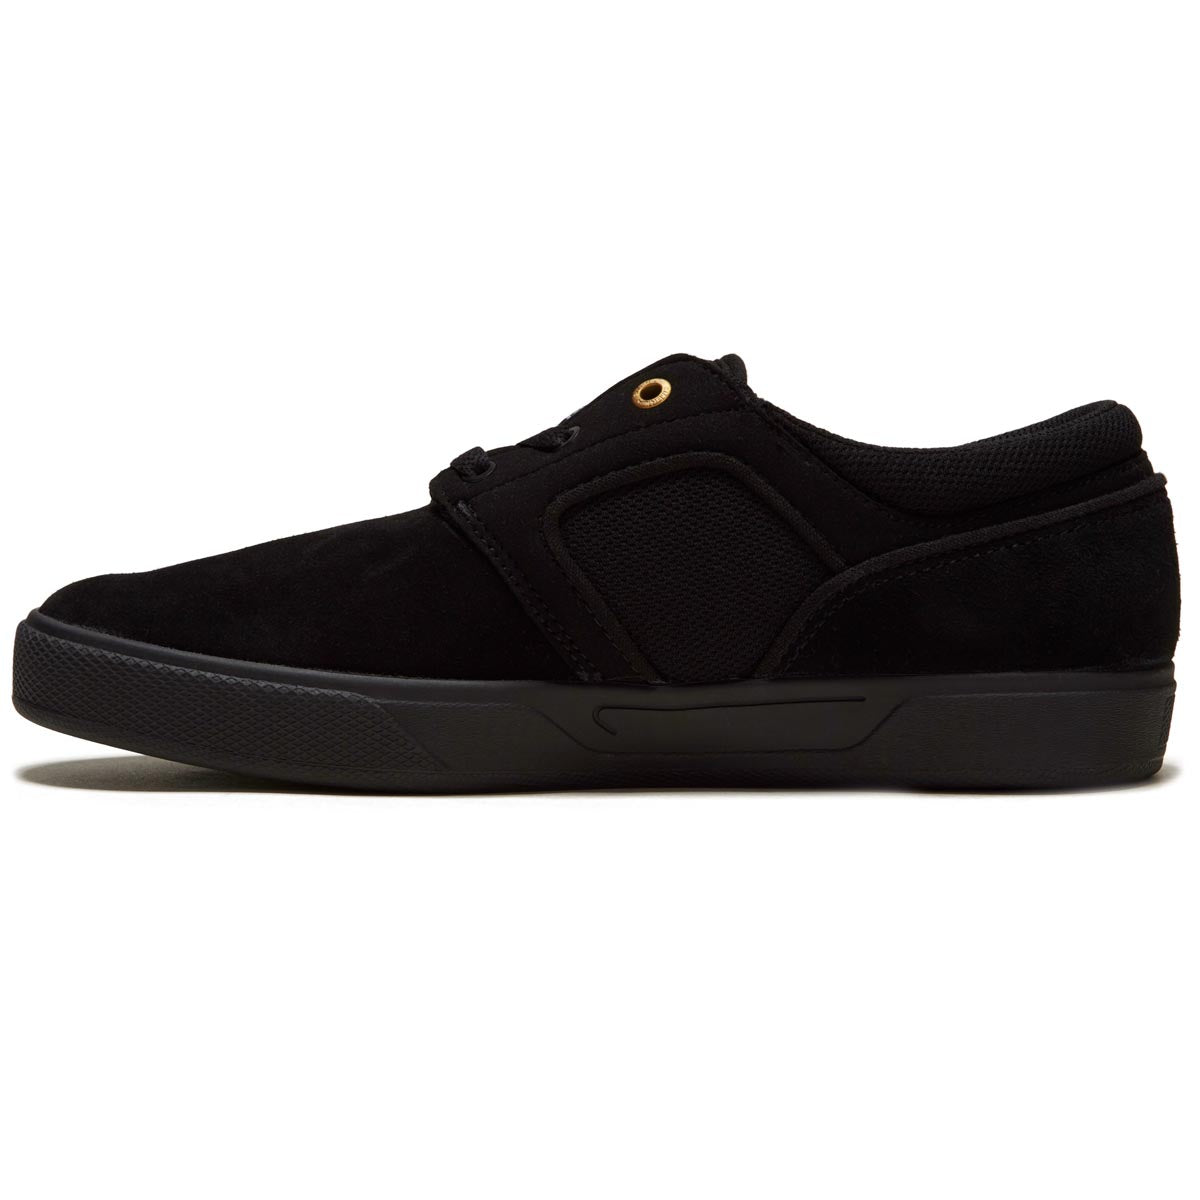 Emerica Figgy G6 Shoes - Black/Black image 2